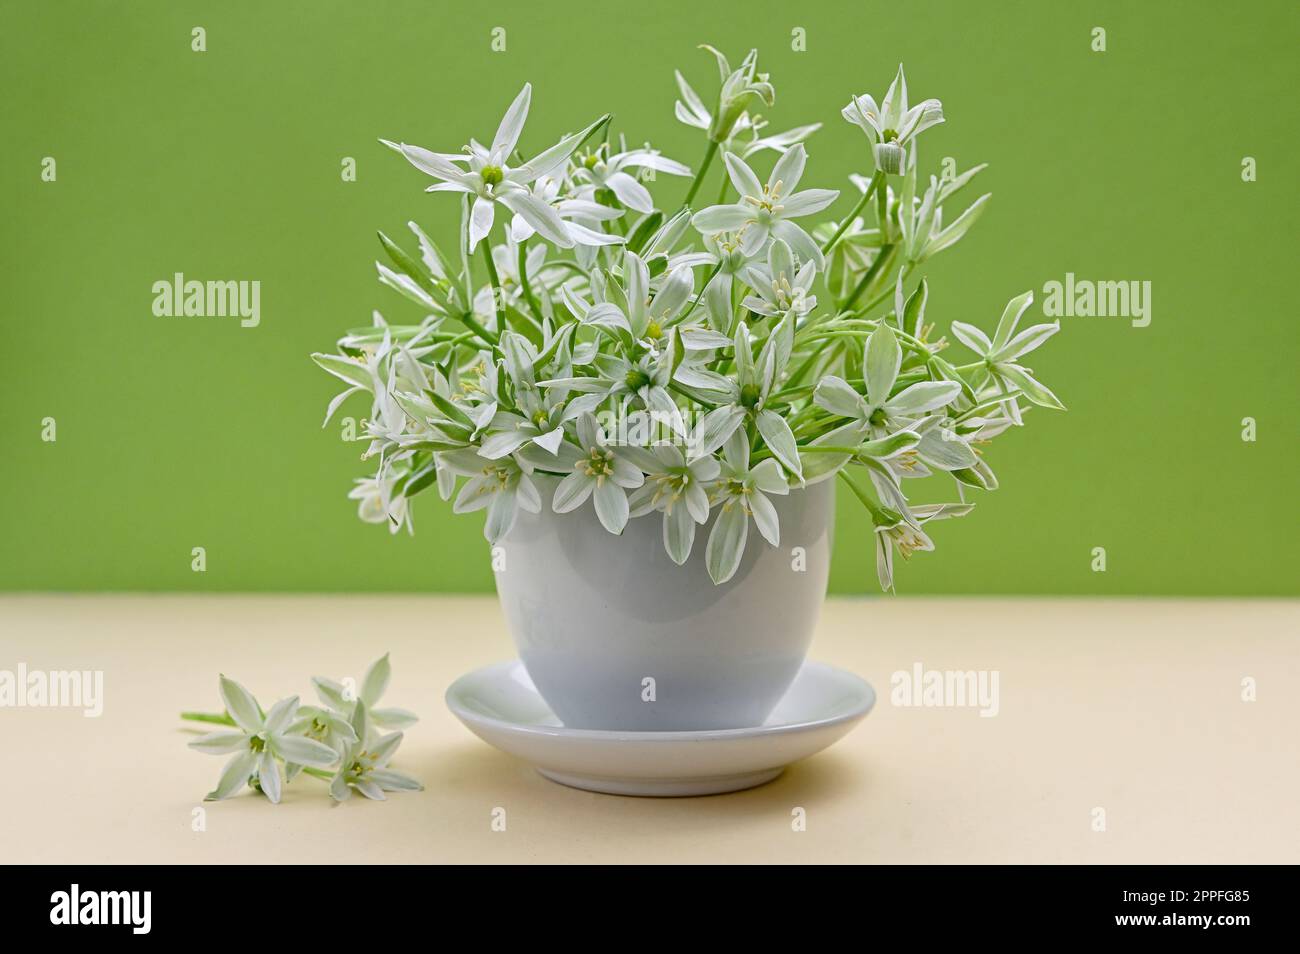 White flowers of Ornithogalum umbellatum or Star of Bethlehem in small vase Stock Photo